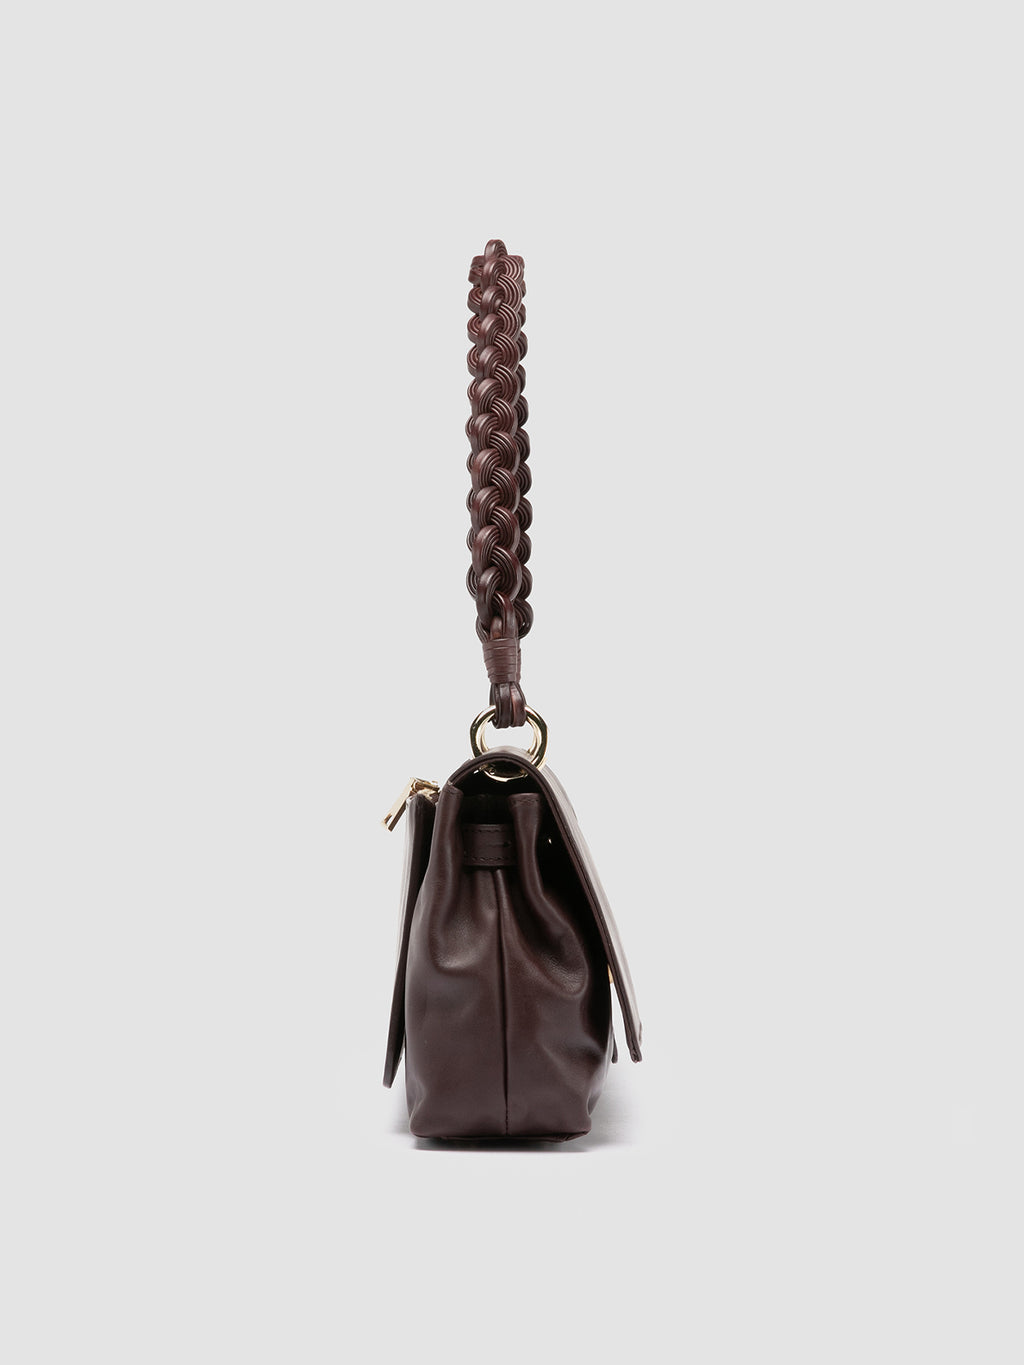 NOLITA WOVEN 212 - Burgundy Nappa Leather Shoulder Bag Officine Creative - 3